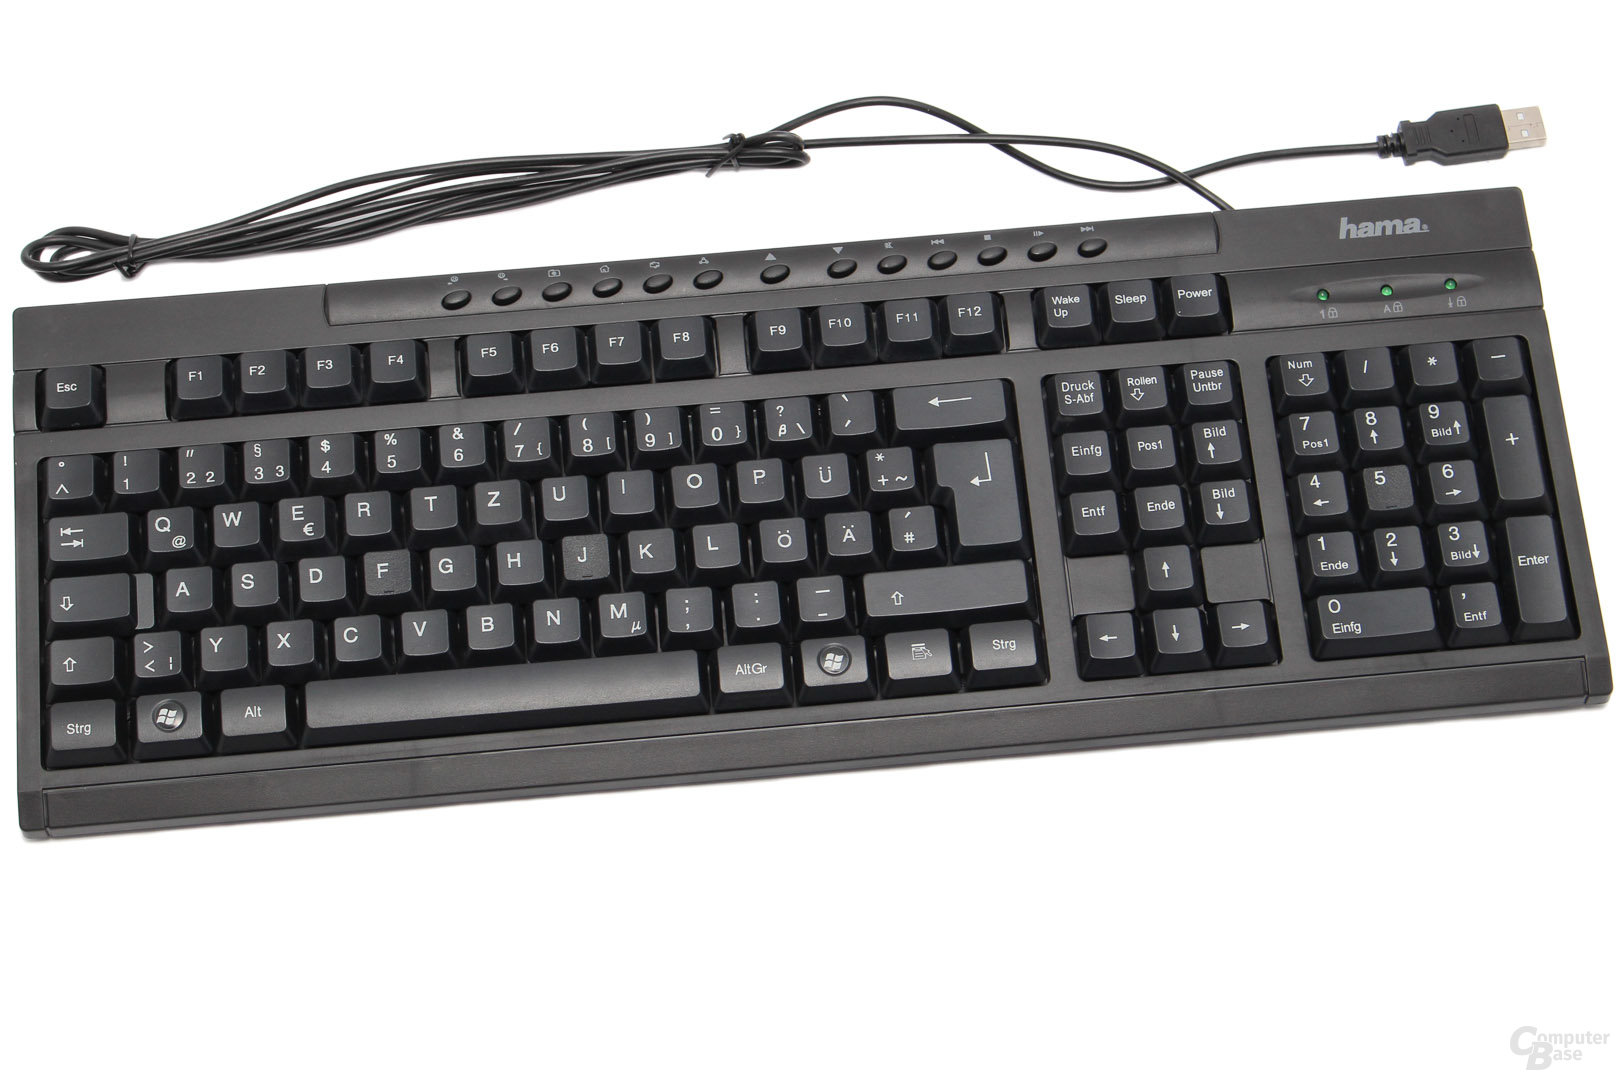 Hama Multimedia Keyboard AK 220